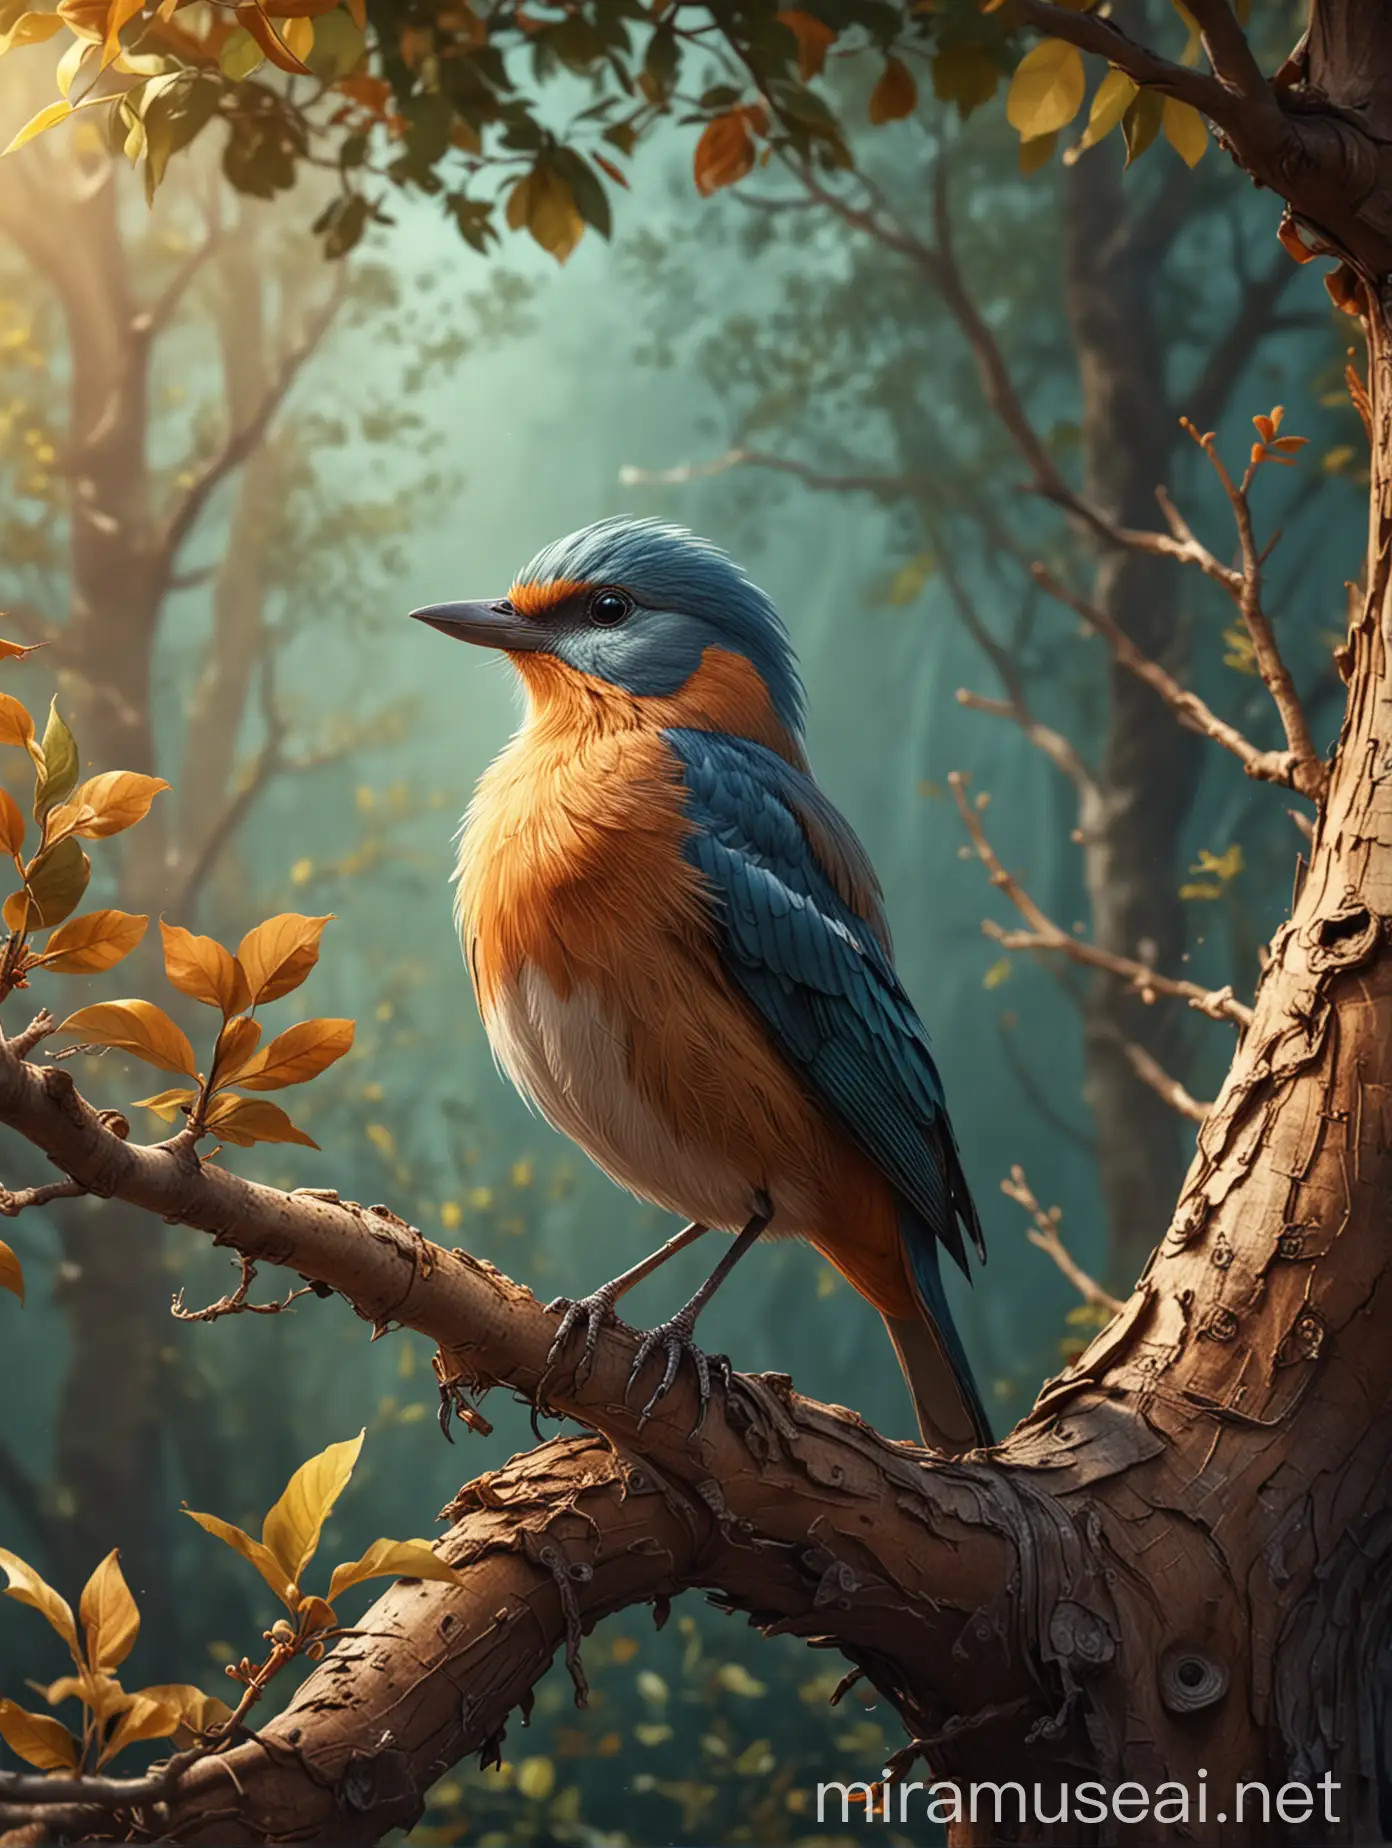 A beautiful digital illustration of a bird on a tree